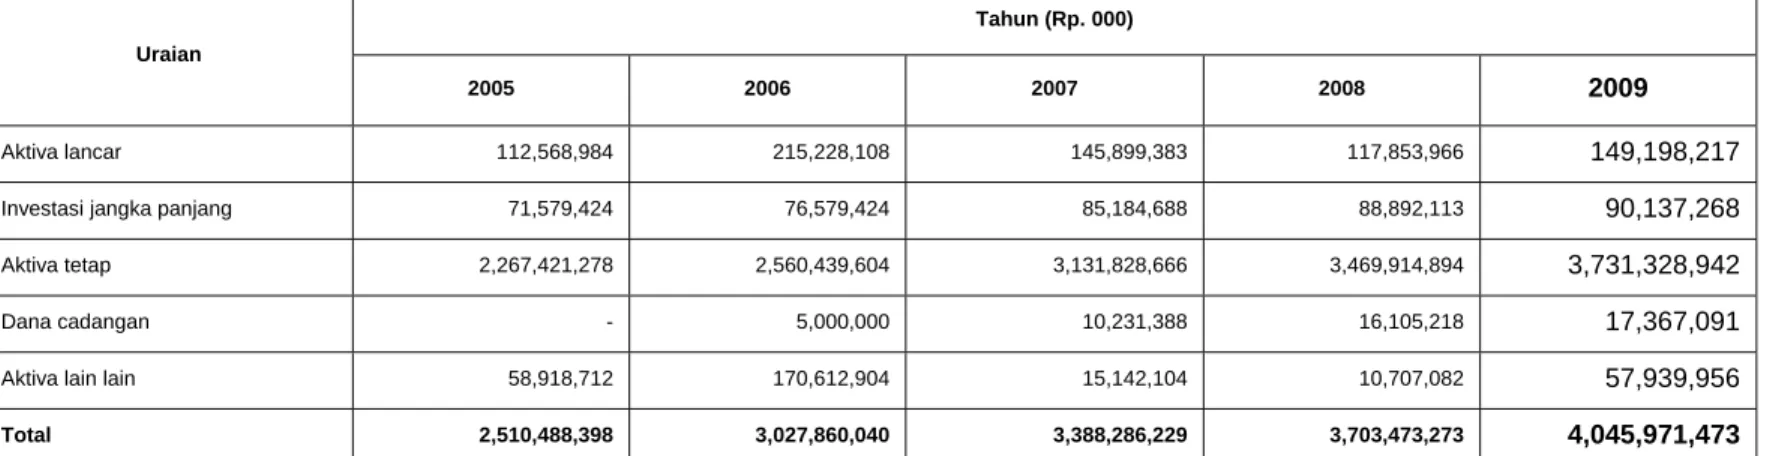 Tabel 3.5  Aset  Daerah  Tahun 2005-2009  Uraian  Tahun (Rp. 000)  2005  2006 2007 2008  2009  Aktiva lancar  112,568,984  215,228,108 145,899,383  117,853,966  149,198,217 